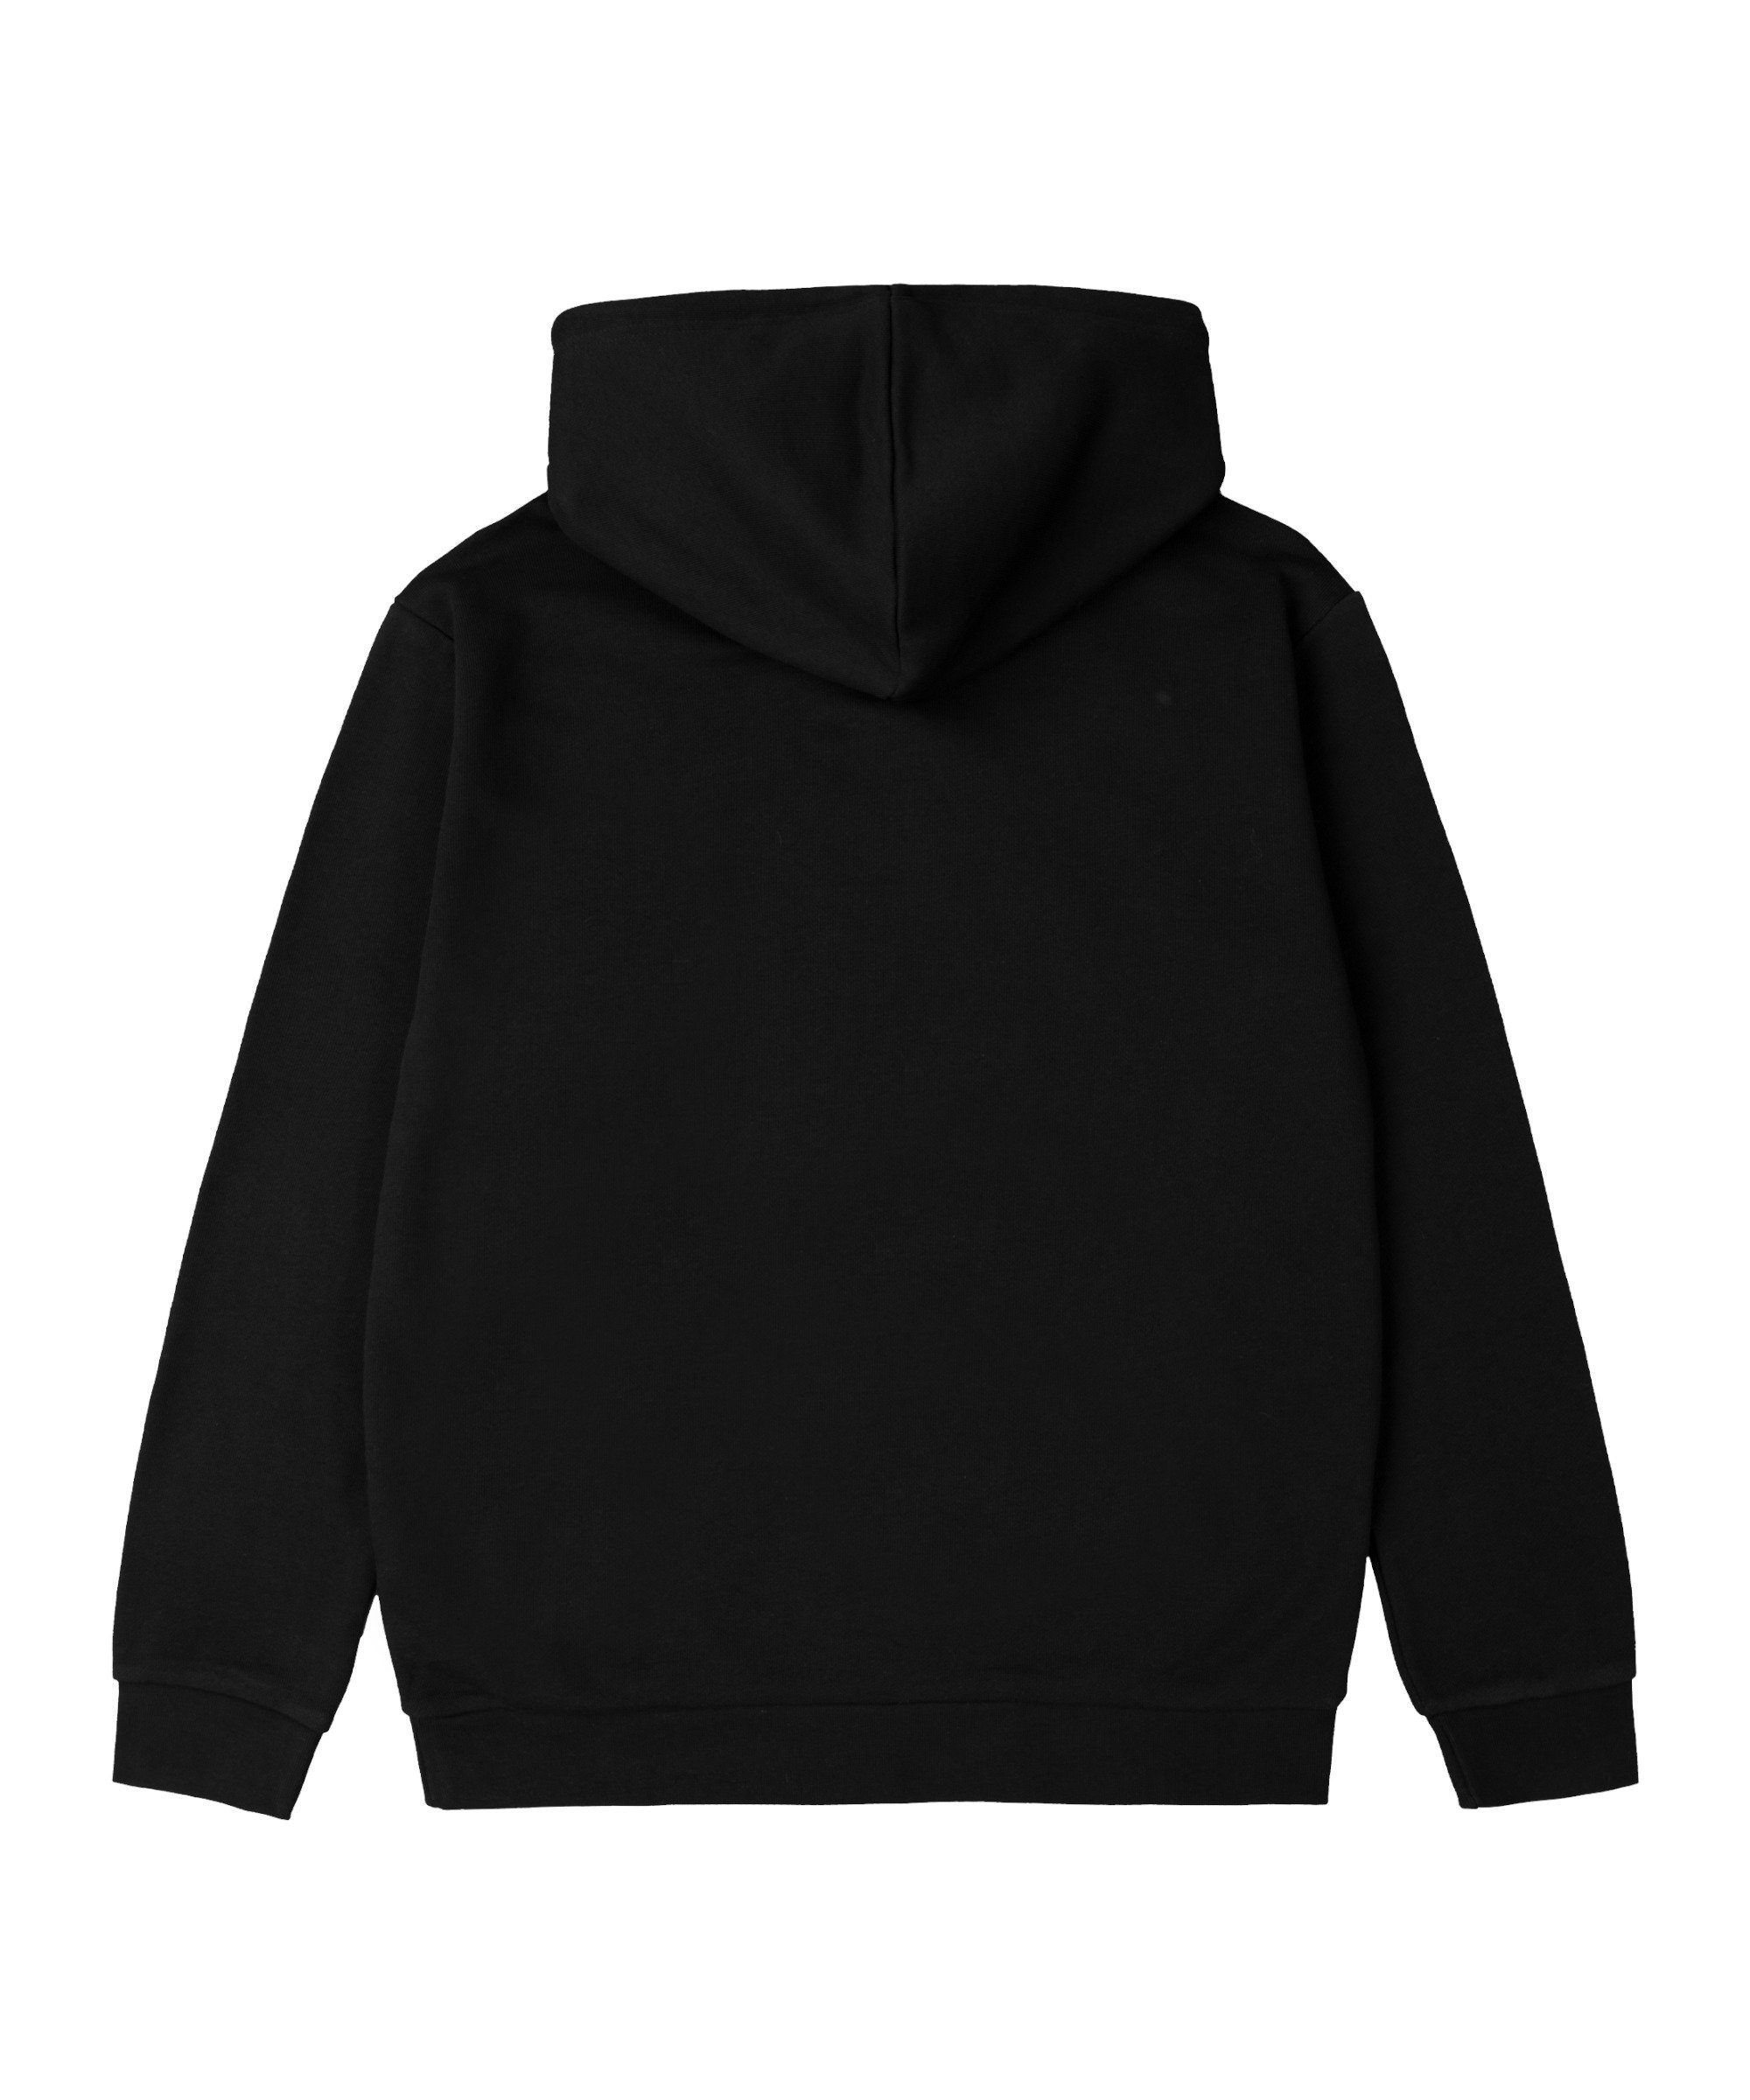 adidas Originals schwarzweiss Sweatshirt Essential Hoody